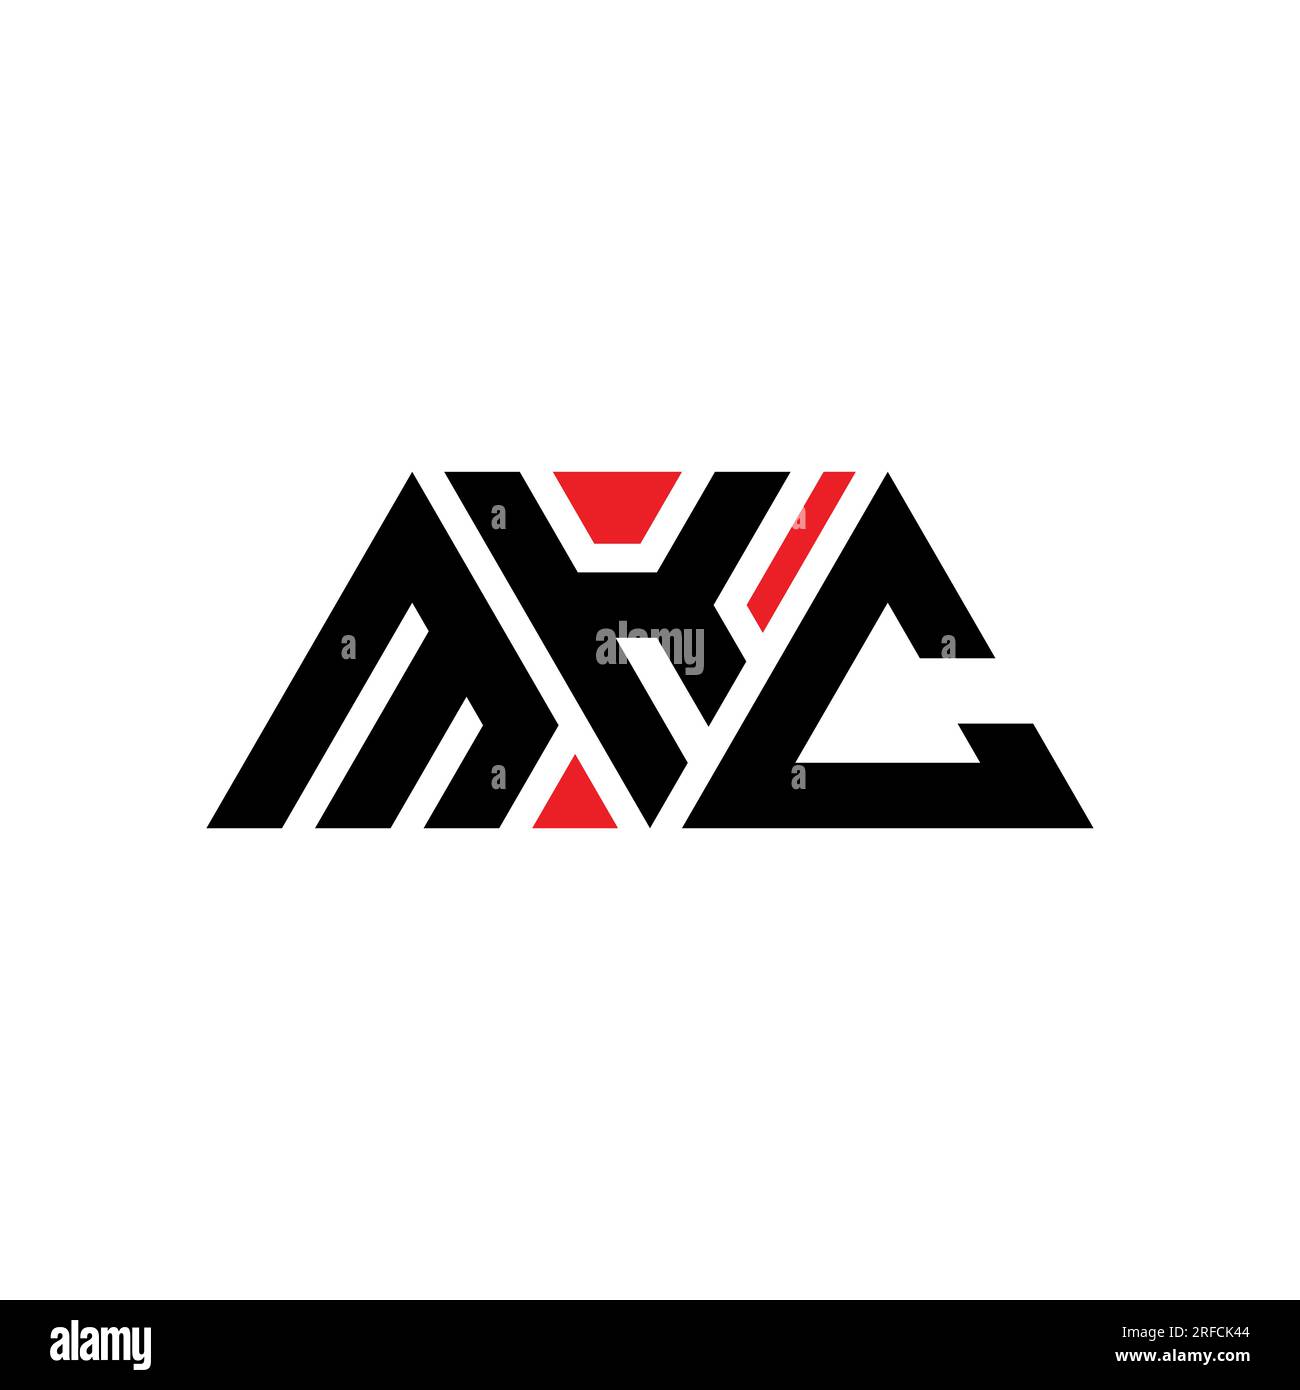 MKC beats logo by 4M0RPH0US-831NGS on DeviantArt